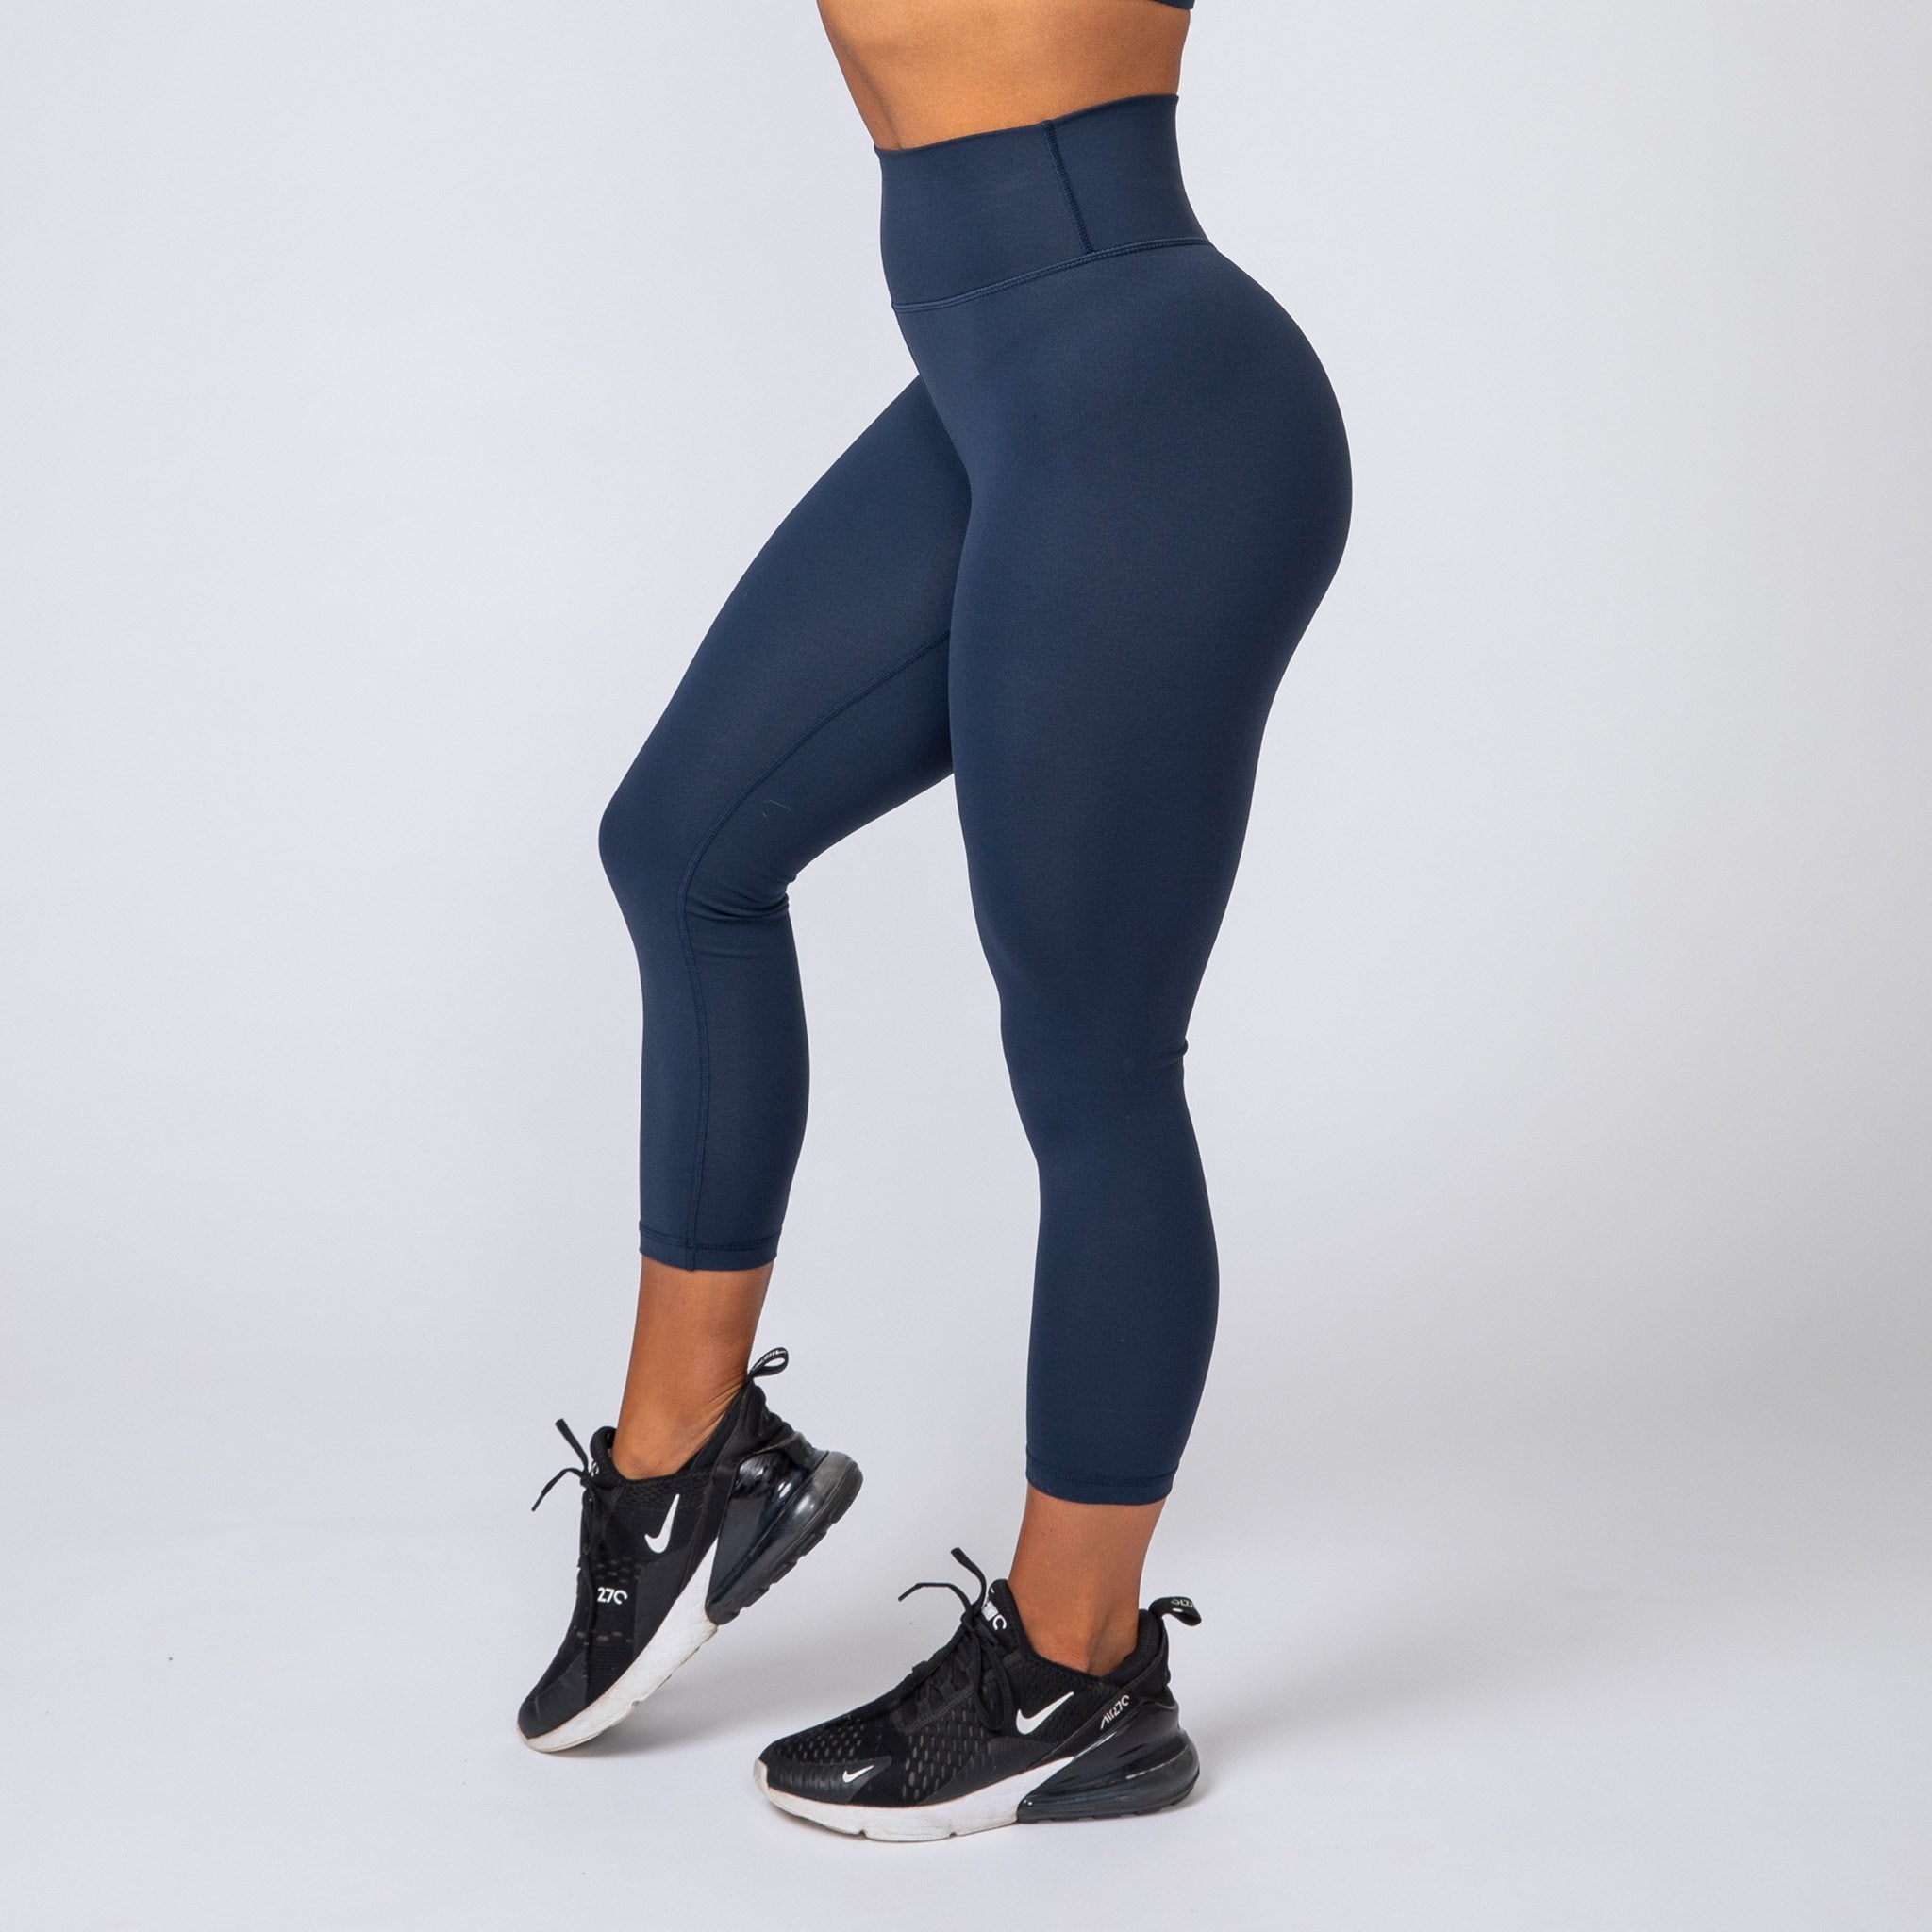 New High Waisted Scrunch Bum Gym Legging with Side Pocket | eBay